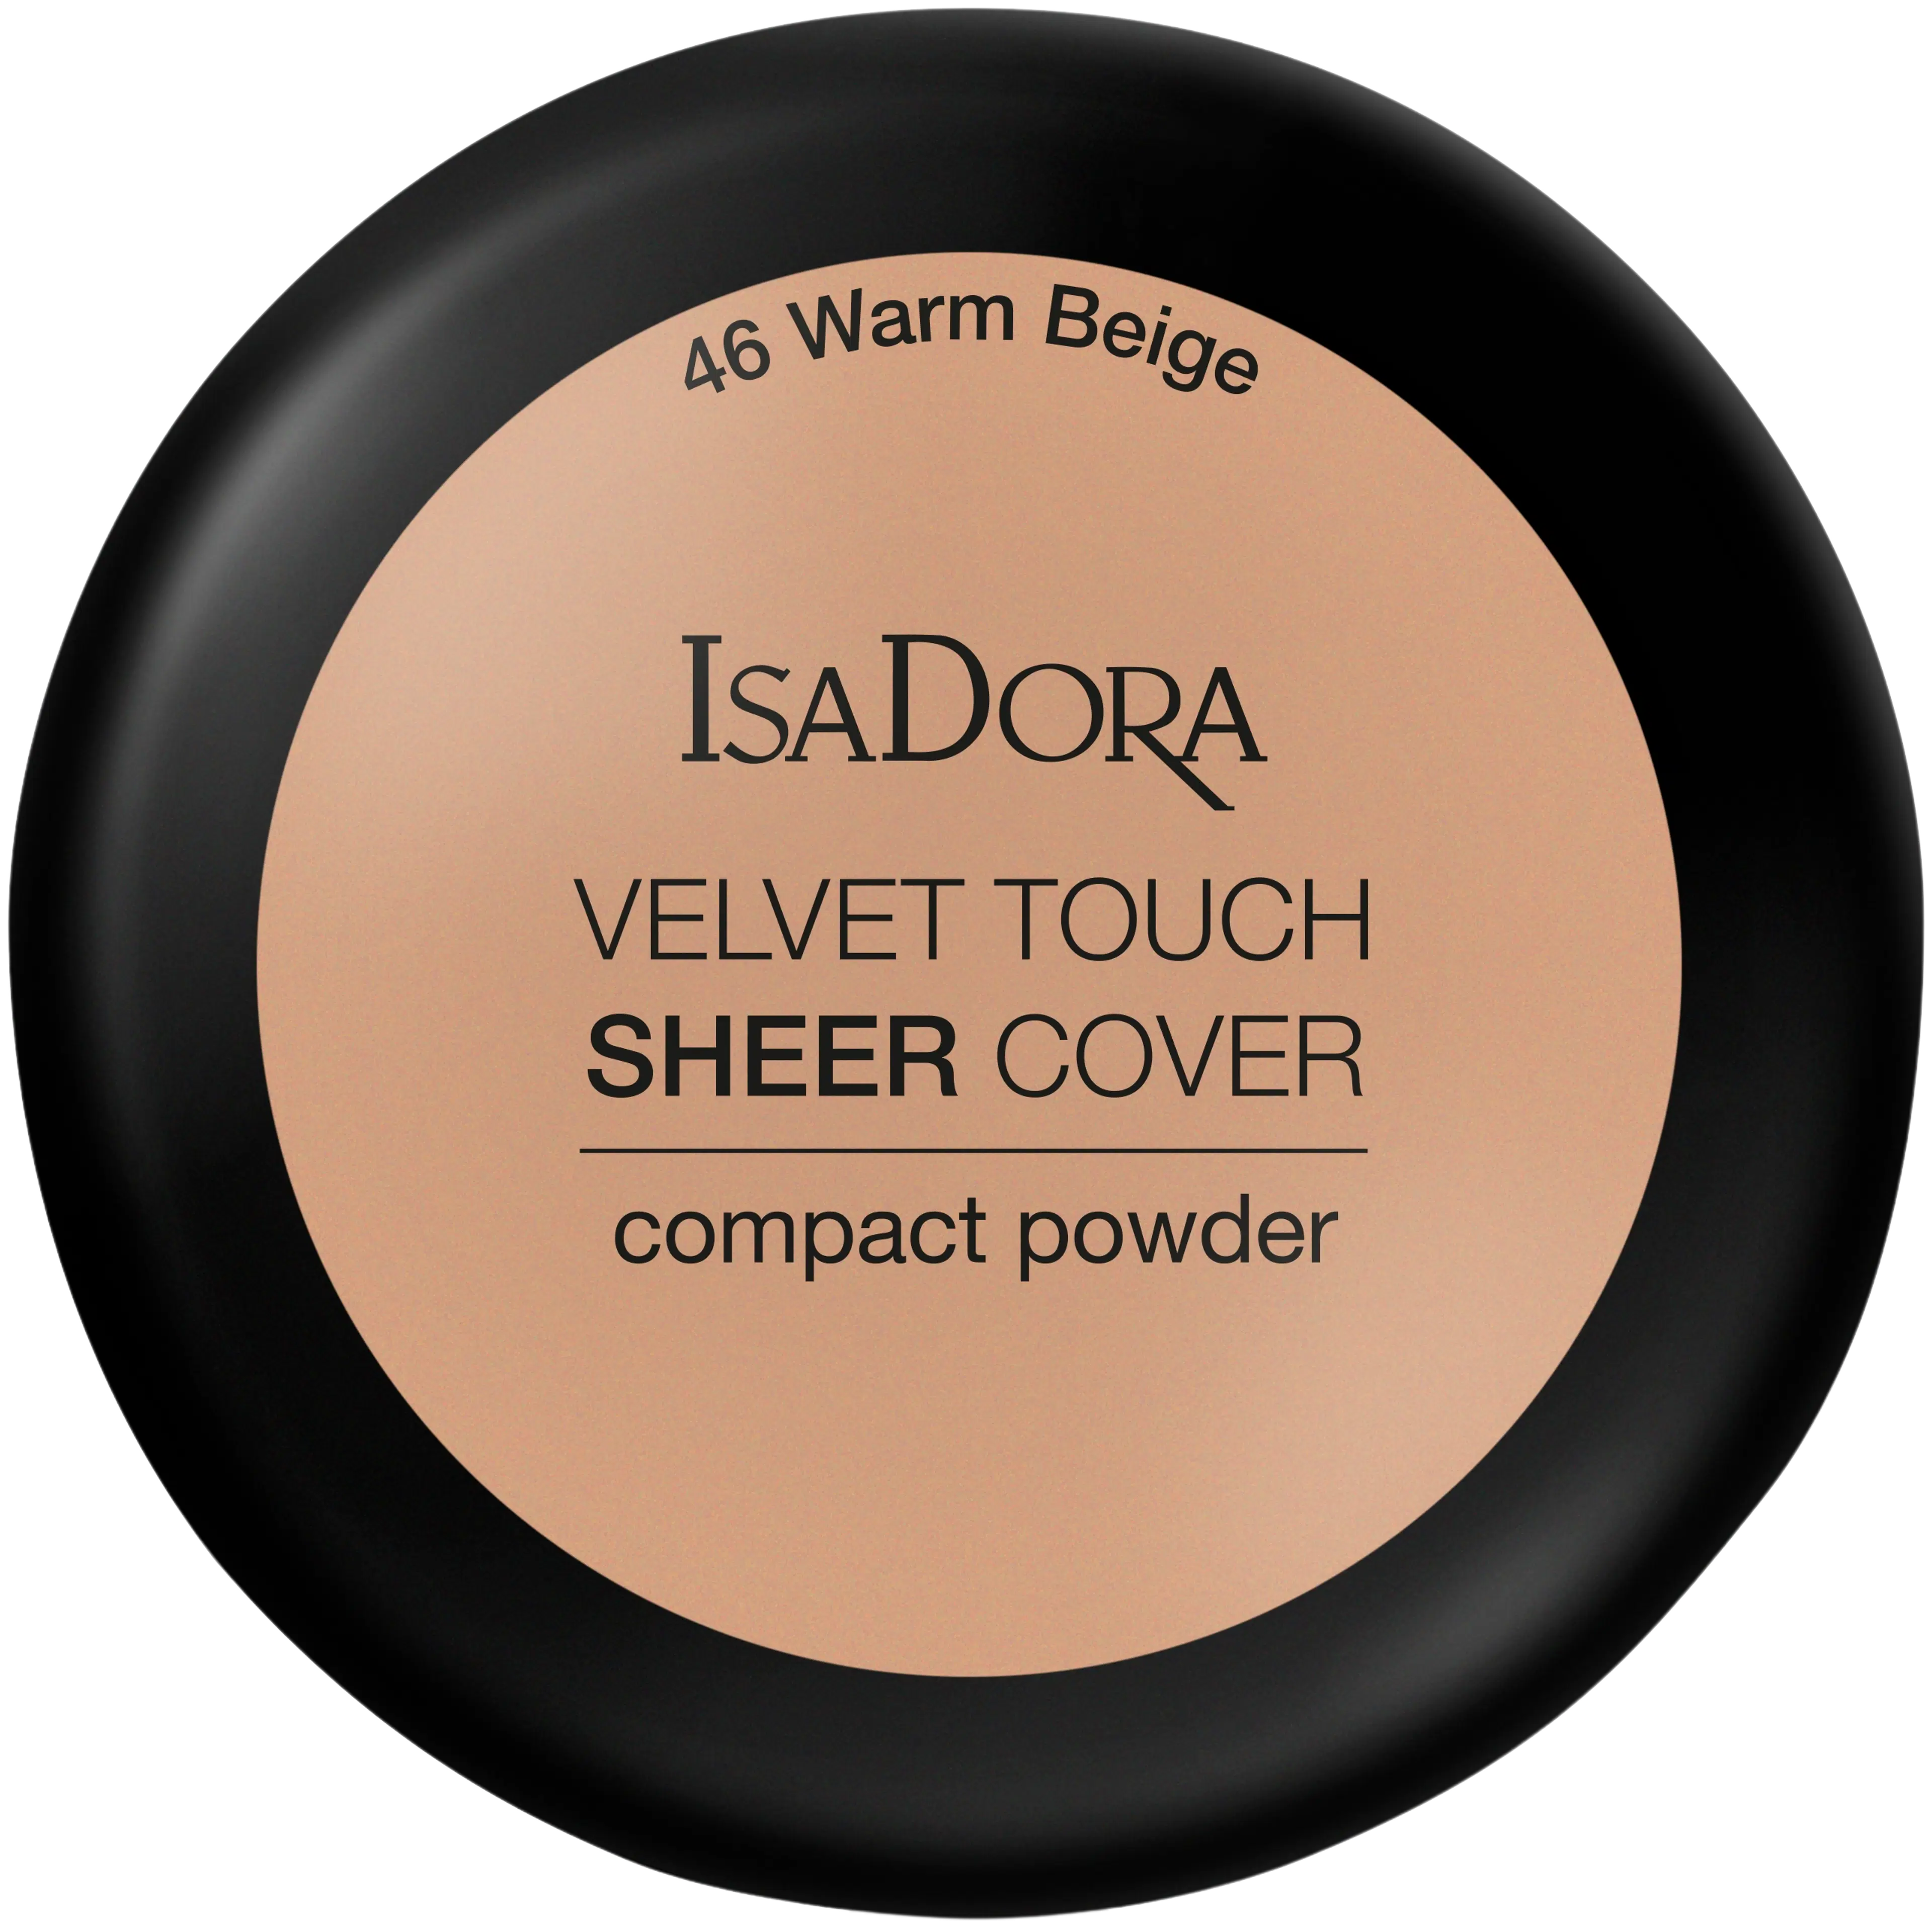 IsaDora Velvet Touch Sheer Cover Compact Powder 10 g kivipuuteri 46 Warm Beige